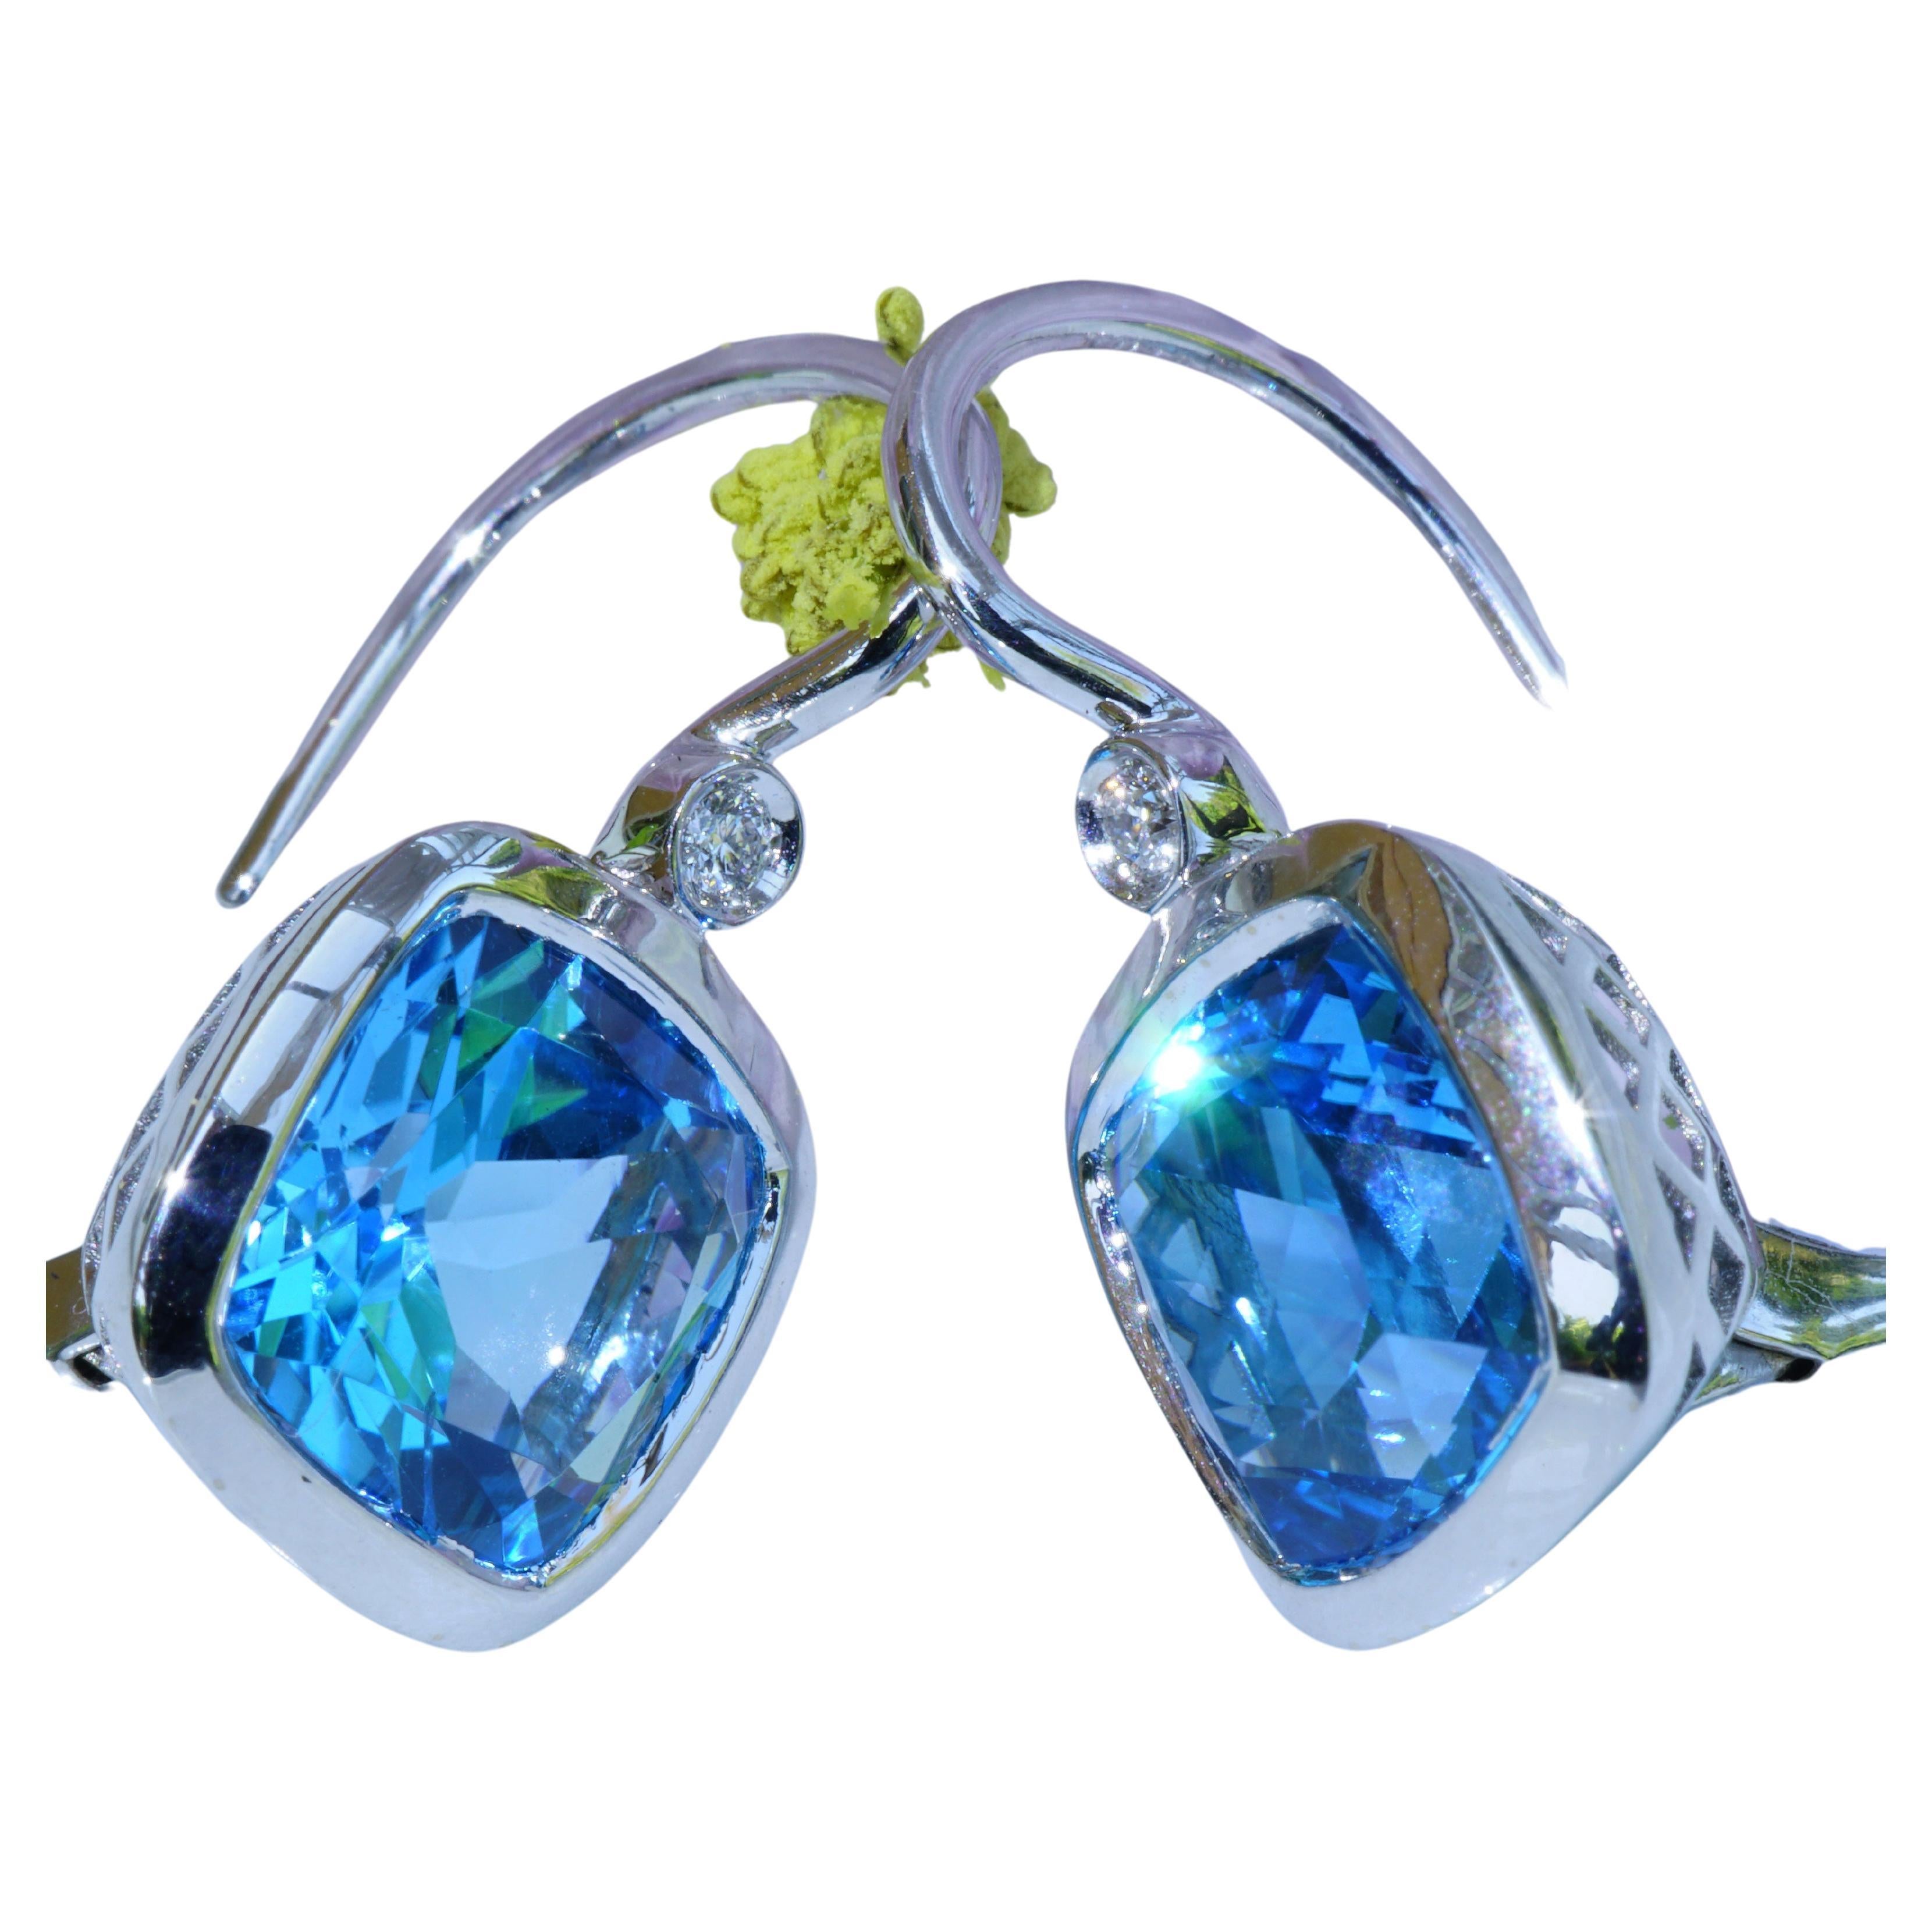 Blue Topaz and Diamonds Earrings Very Modern Setting High End Italian Jewellery 